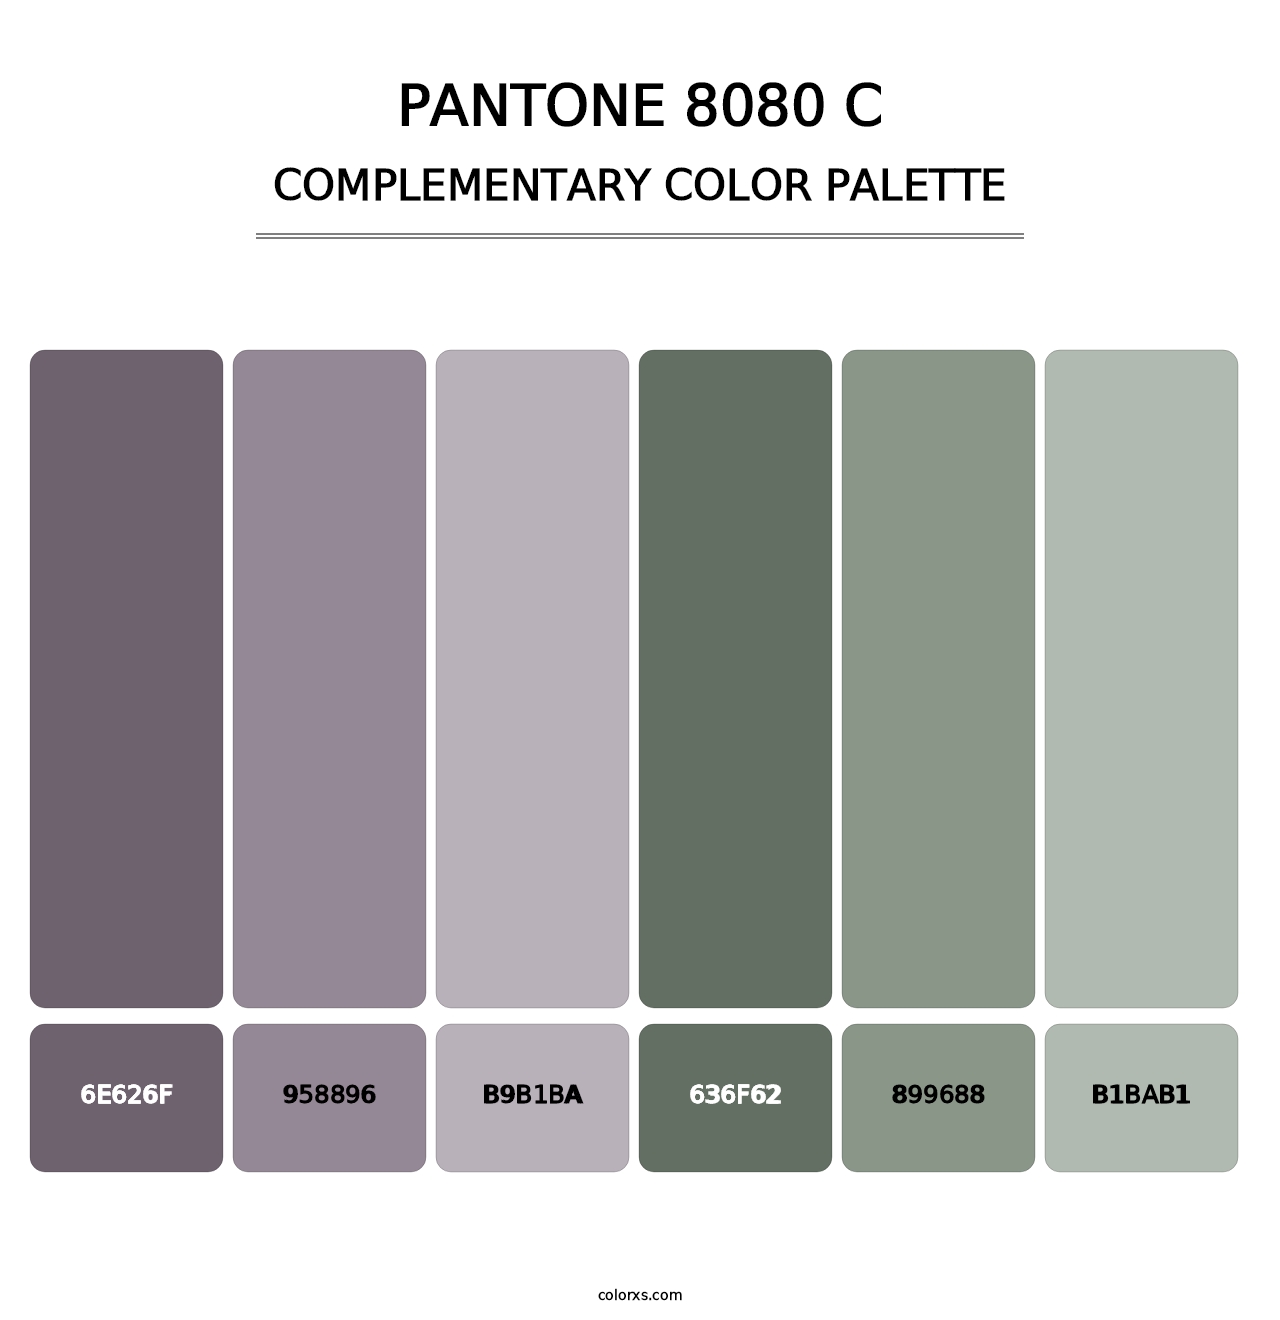 PANTONE 8080 C - Complementary Color Palette